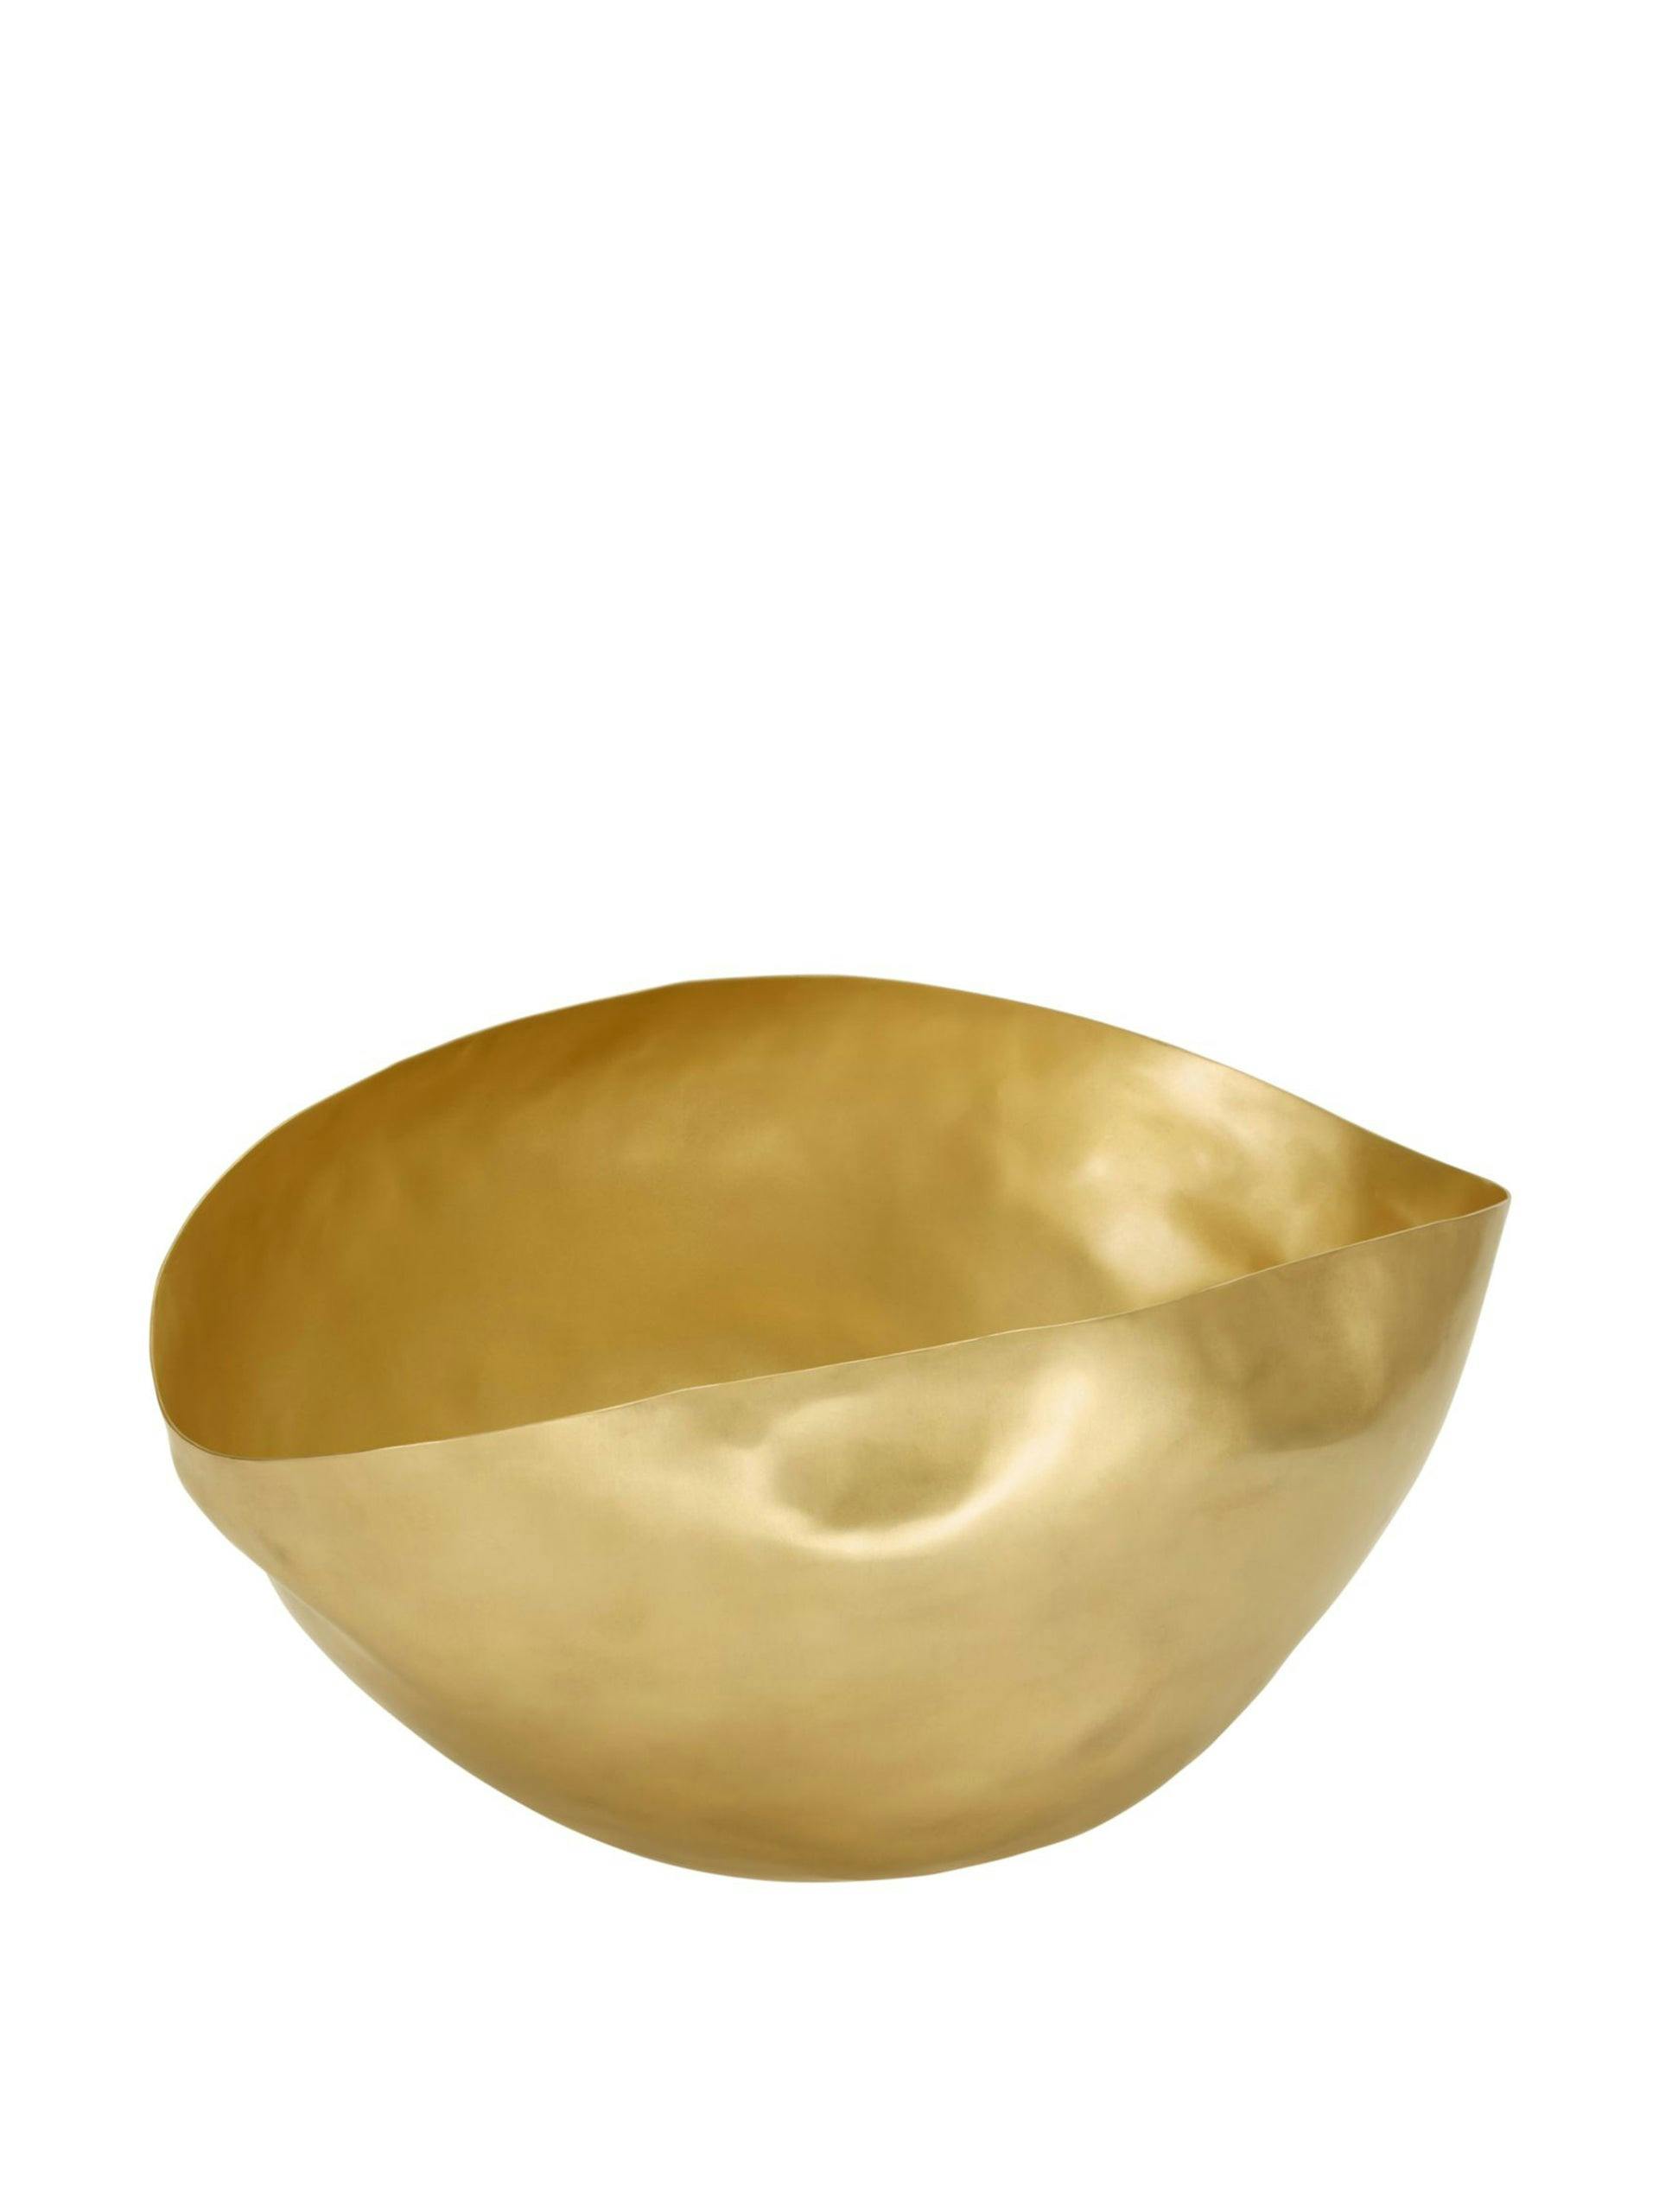 Golden brass vessel